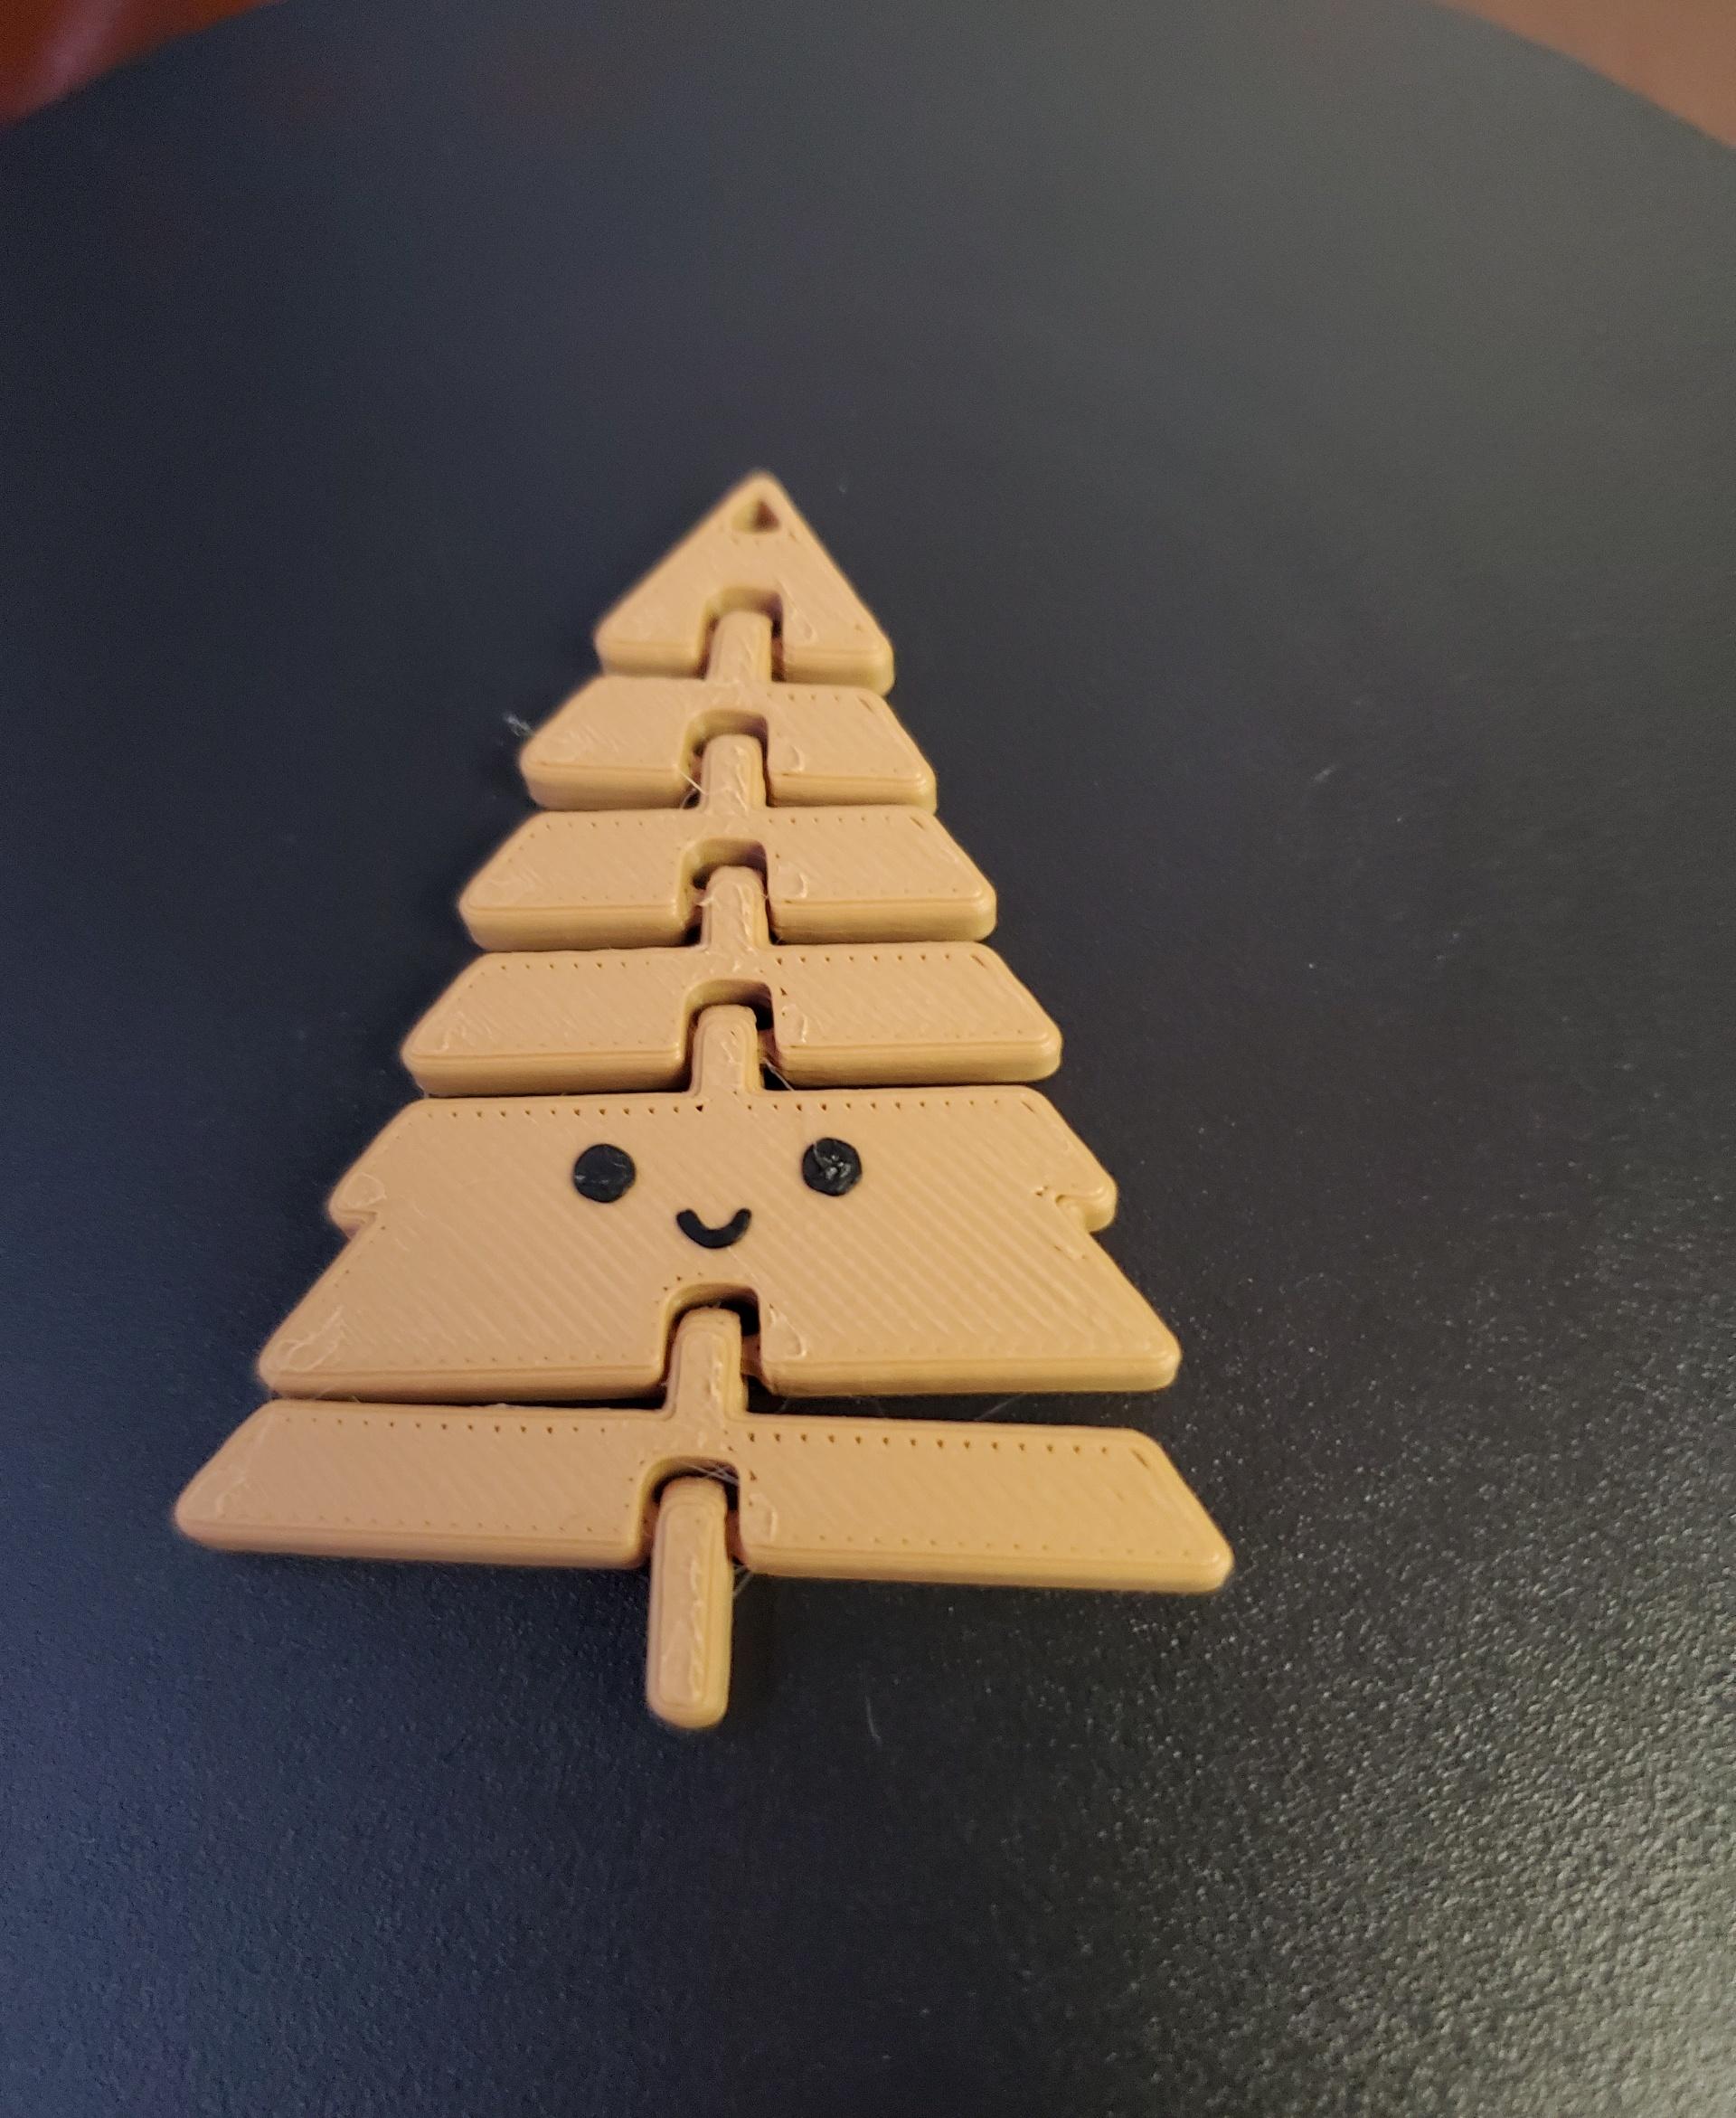 Articulated Kawaii Christmas Tree Keychain - Print in place fidget toy - 3mf - polyterra wood - 3d model